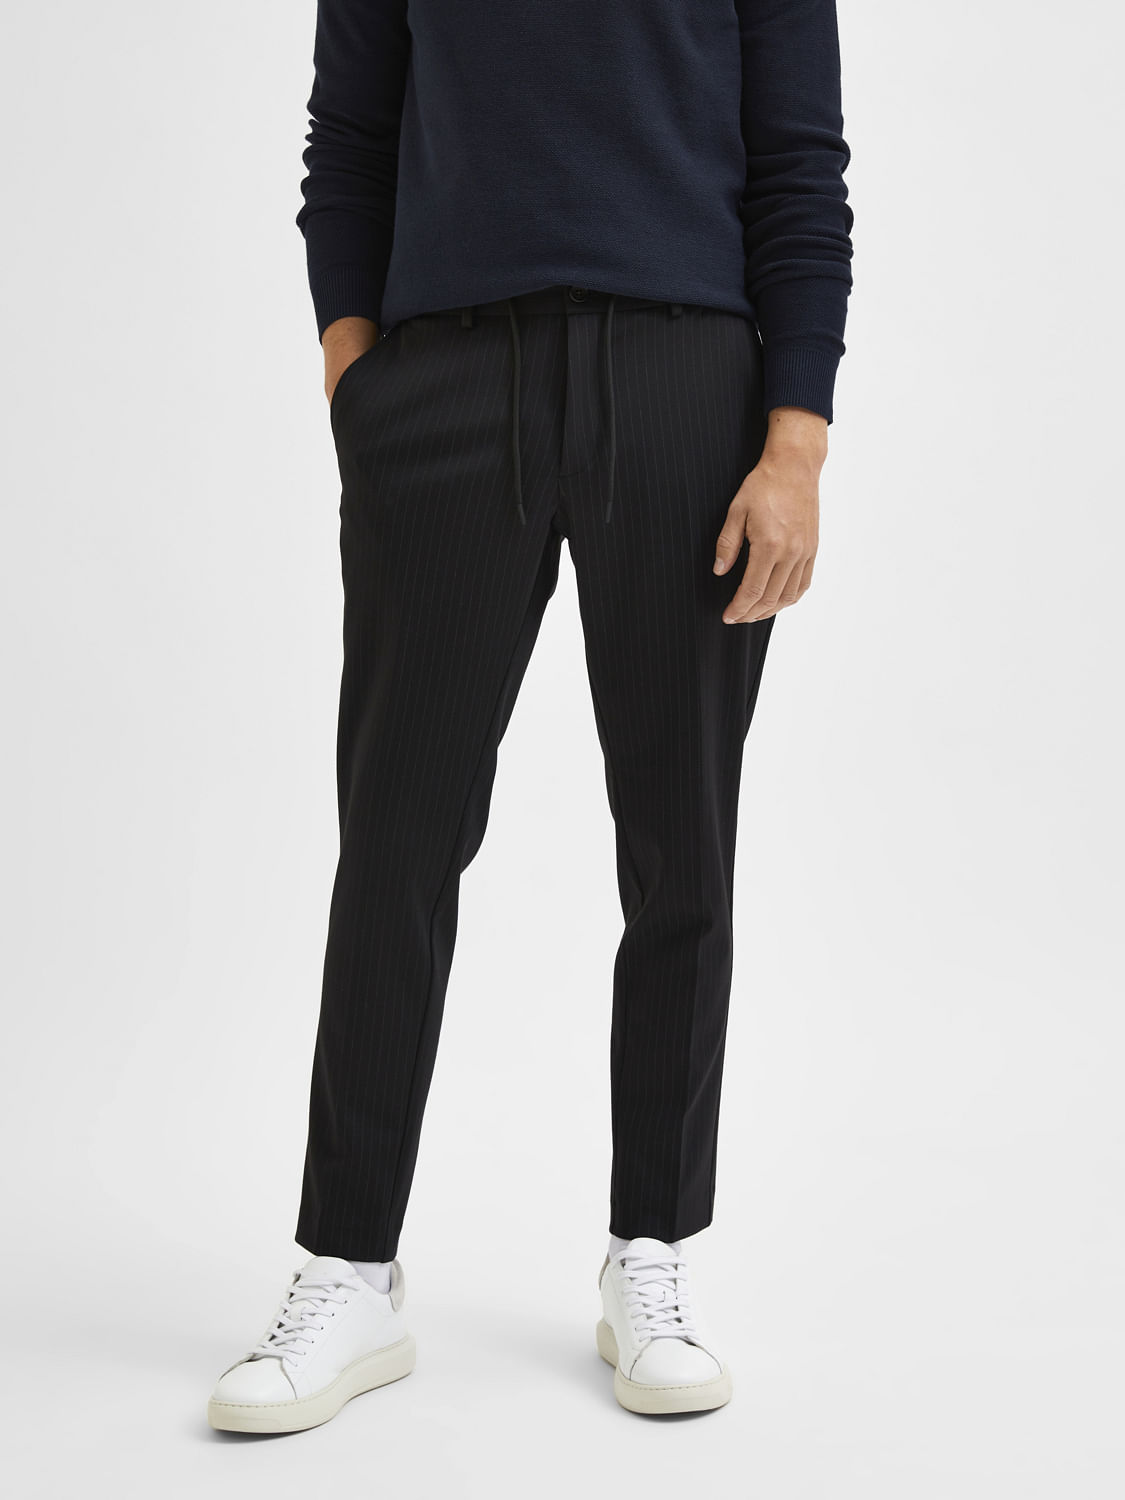 Buy TURTLE Black Mens Slim Fit Self Pattern Trousers | Shoppers Stop